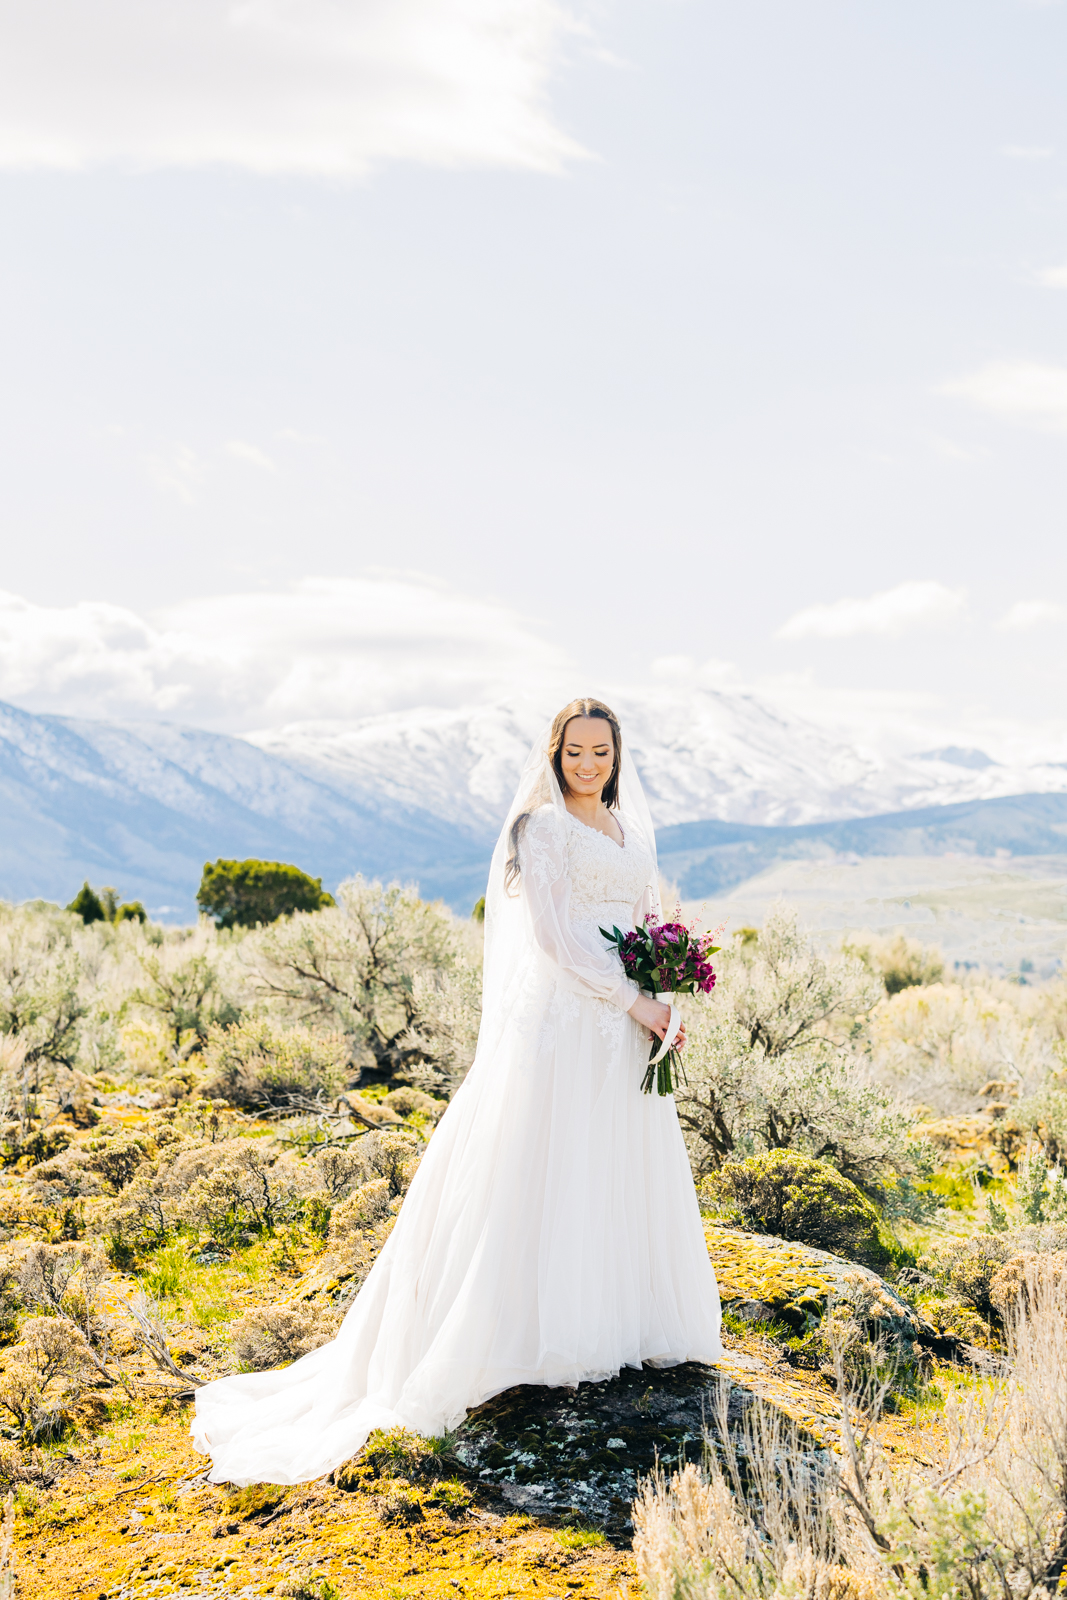 Jackson Hole wedding photographer captures beautiful bride pocatello posed in mountains